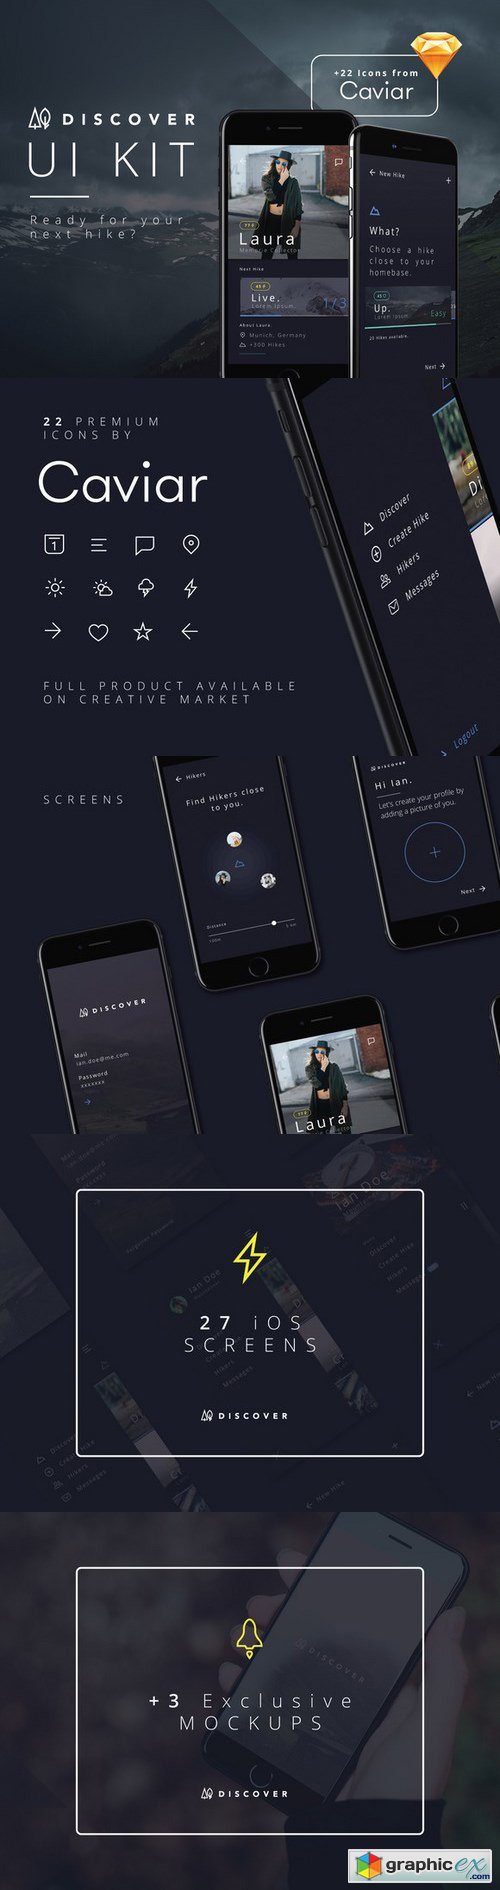 Discover UI Kit iOS